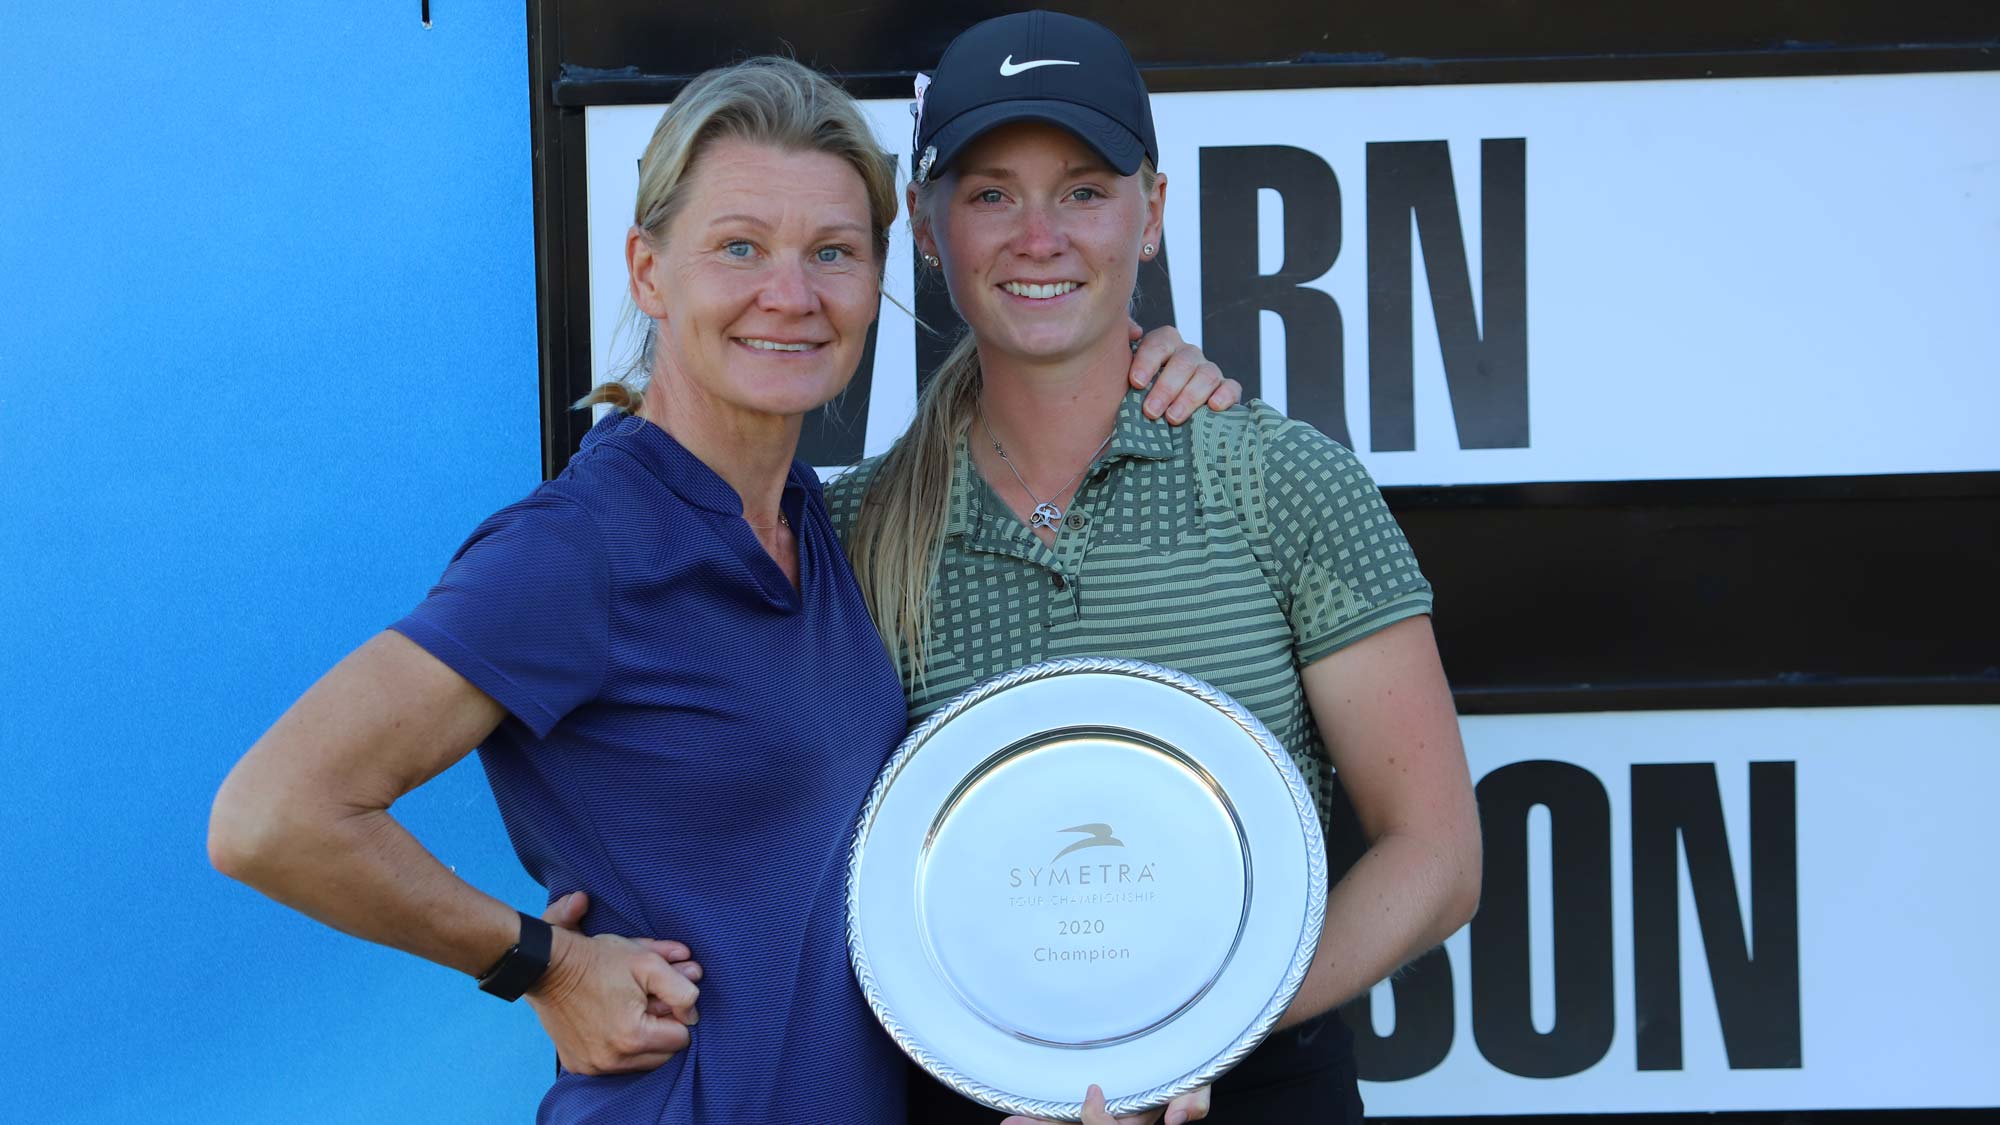 Frida Kinhult wins Tour Champ with Mom